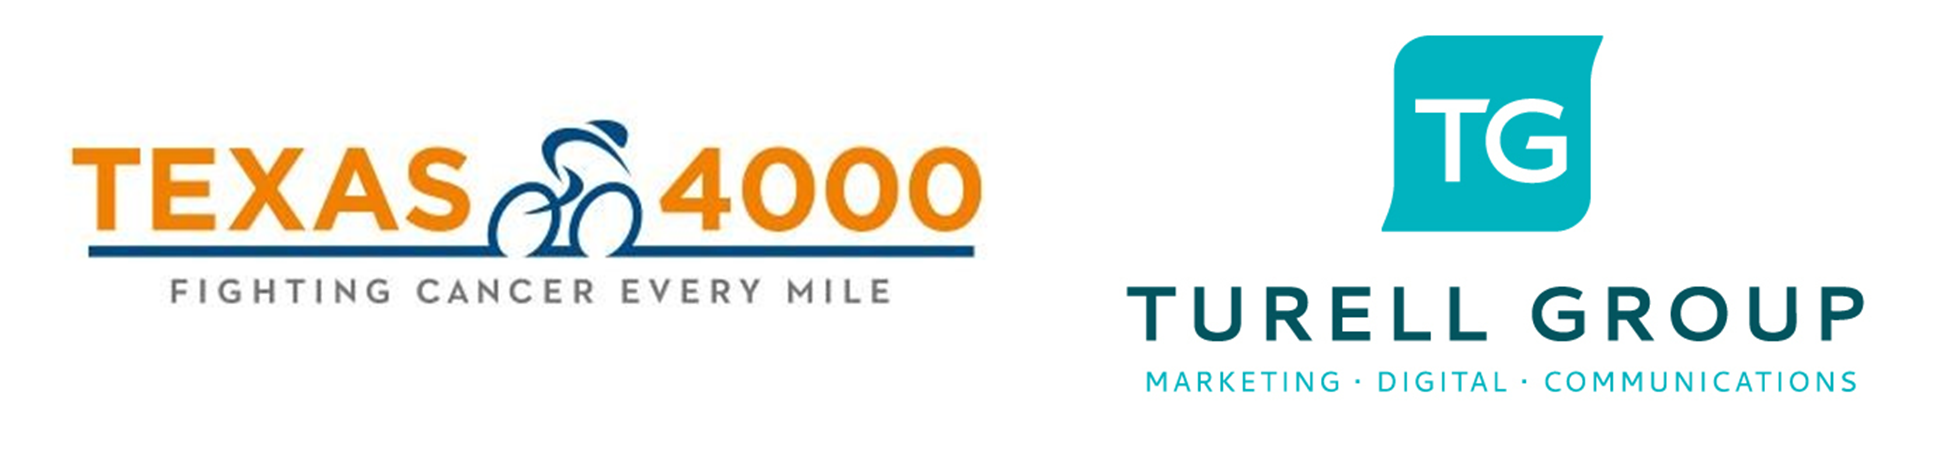 Texas 4000 and Turell Group logos